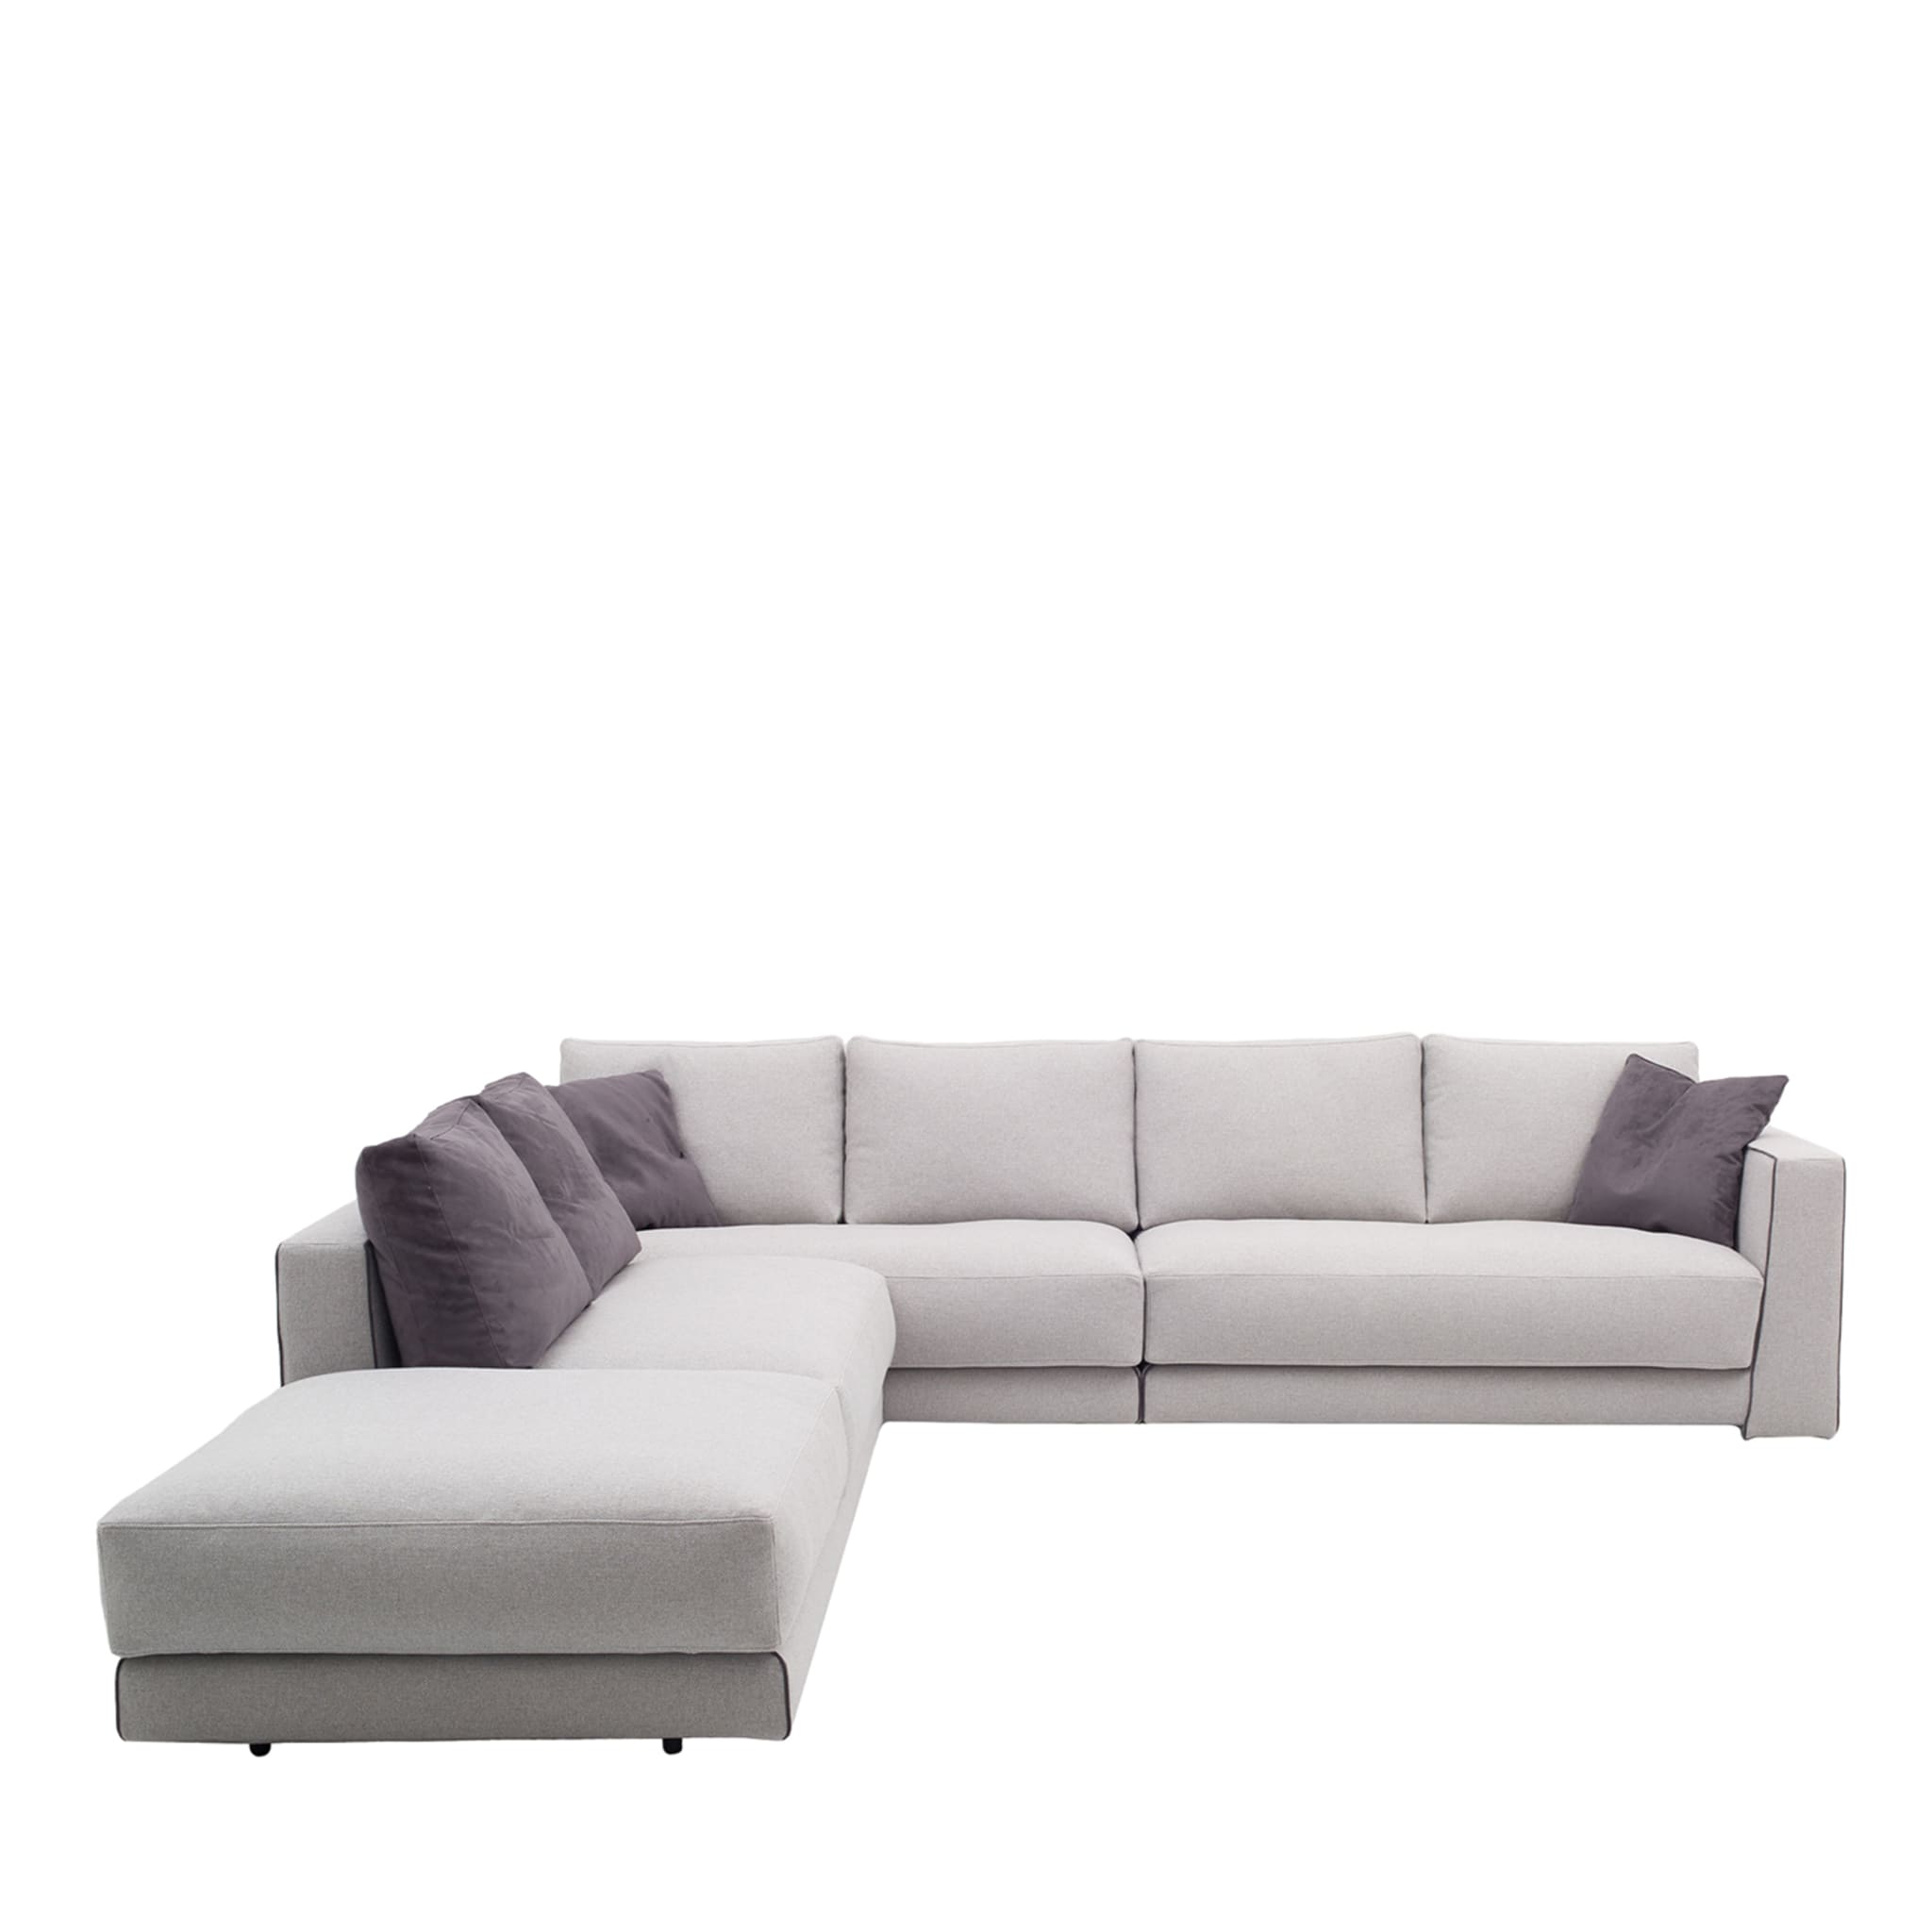 Barclays Angular Gray Sofa - Main view